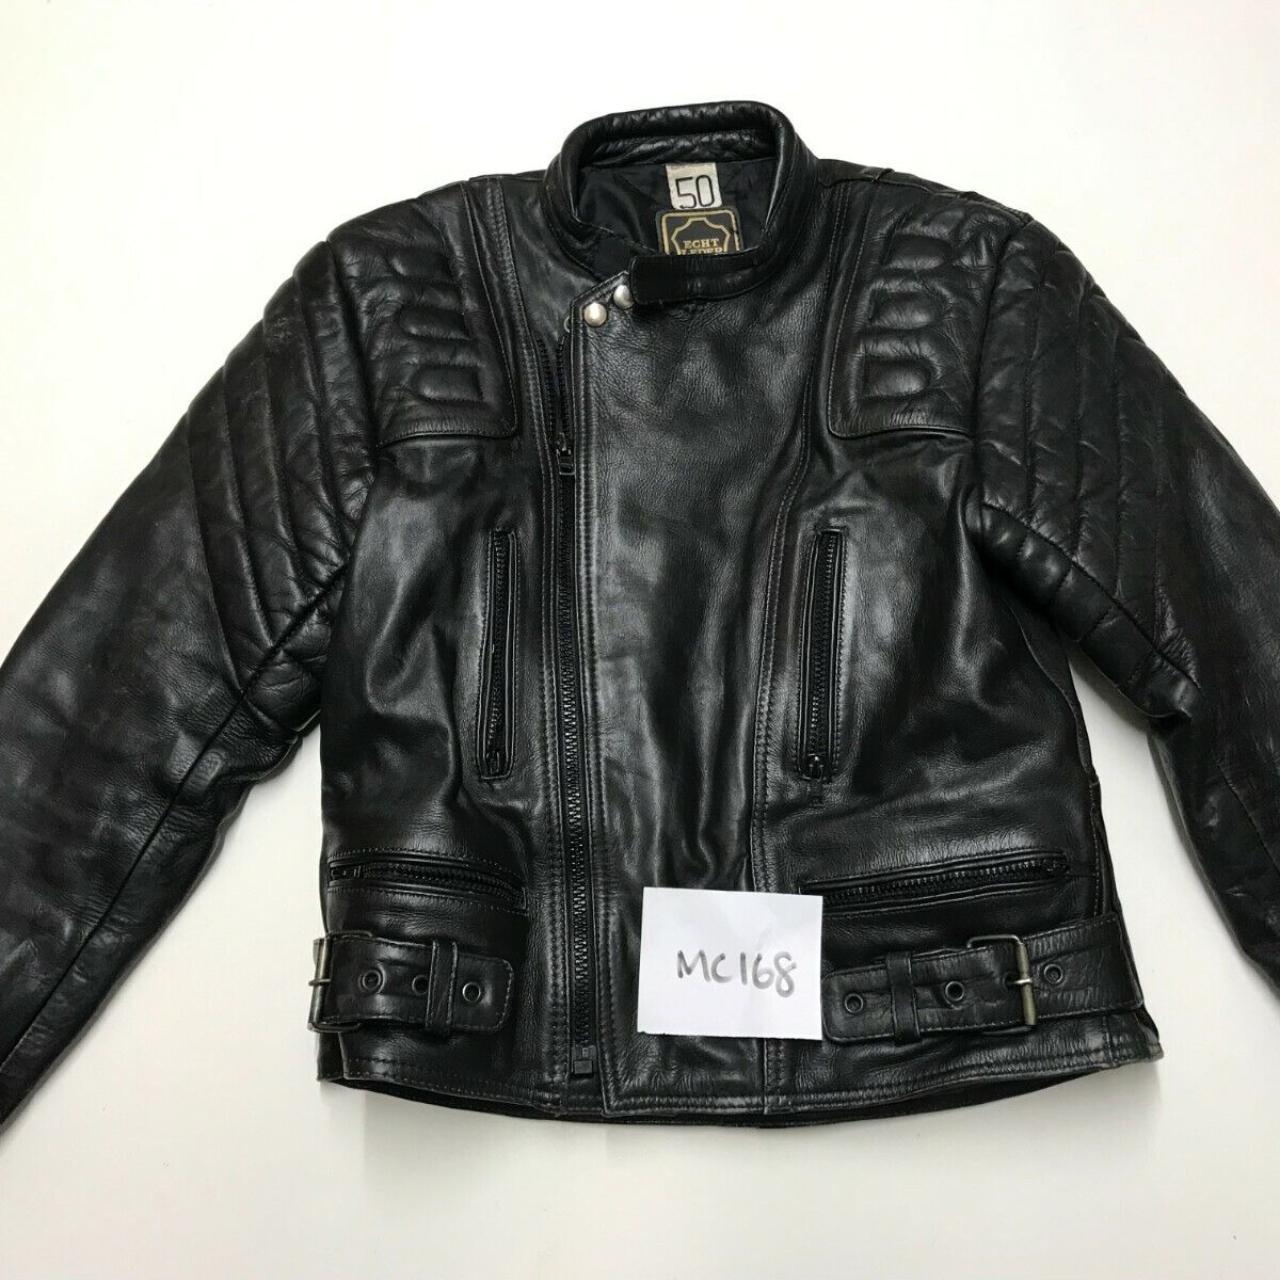 OREX Vintage Motorcycle Leather Jacket Label 50... - Depop